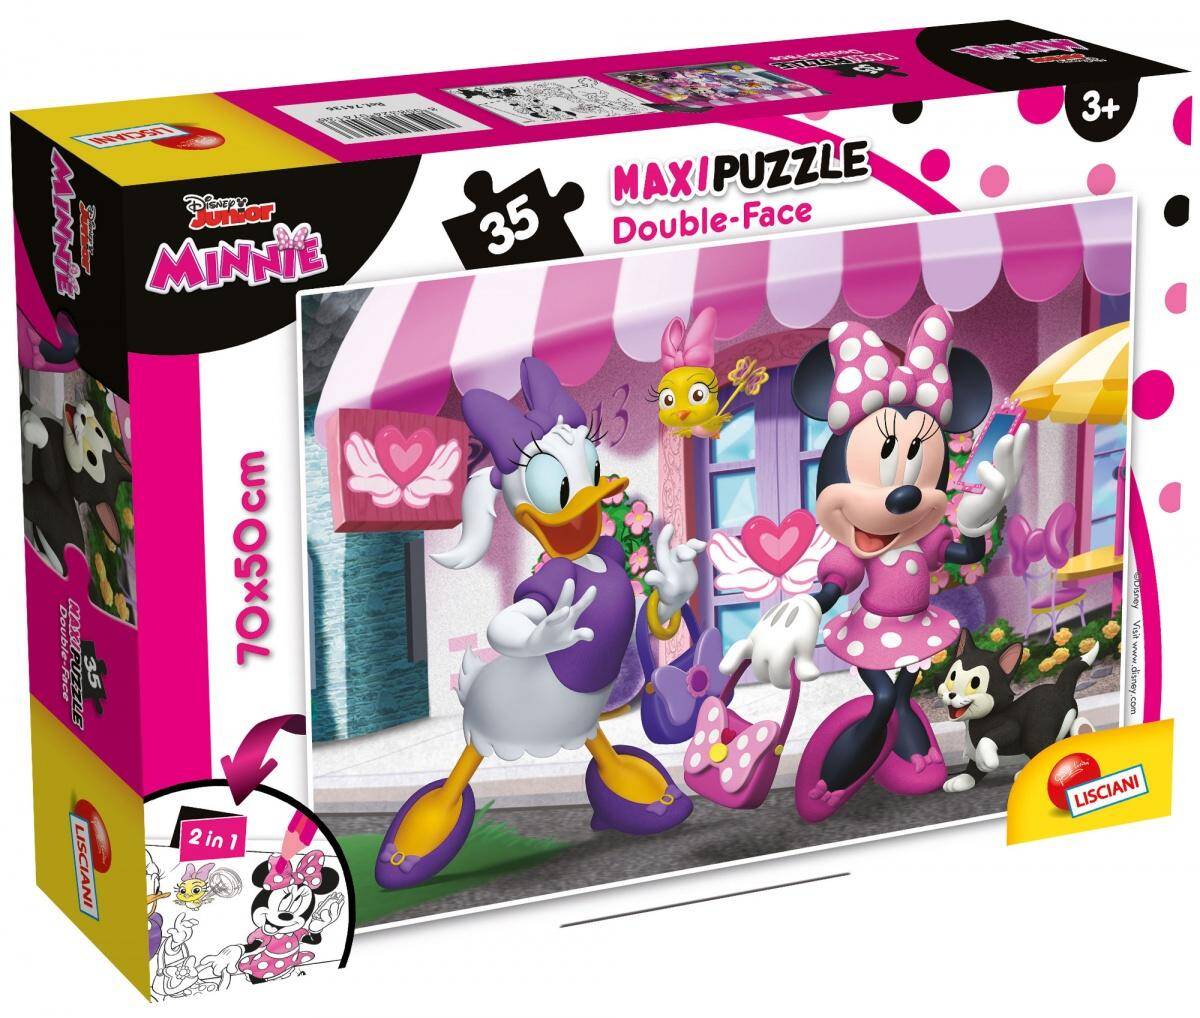 Puzzle 35 maxi double-face Minnie 304-74136